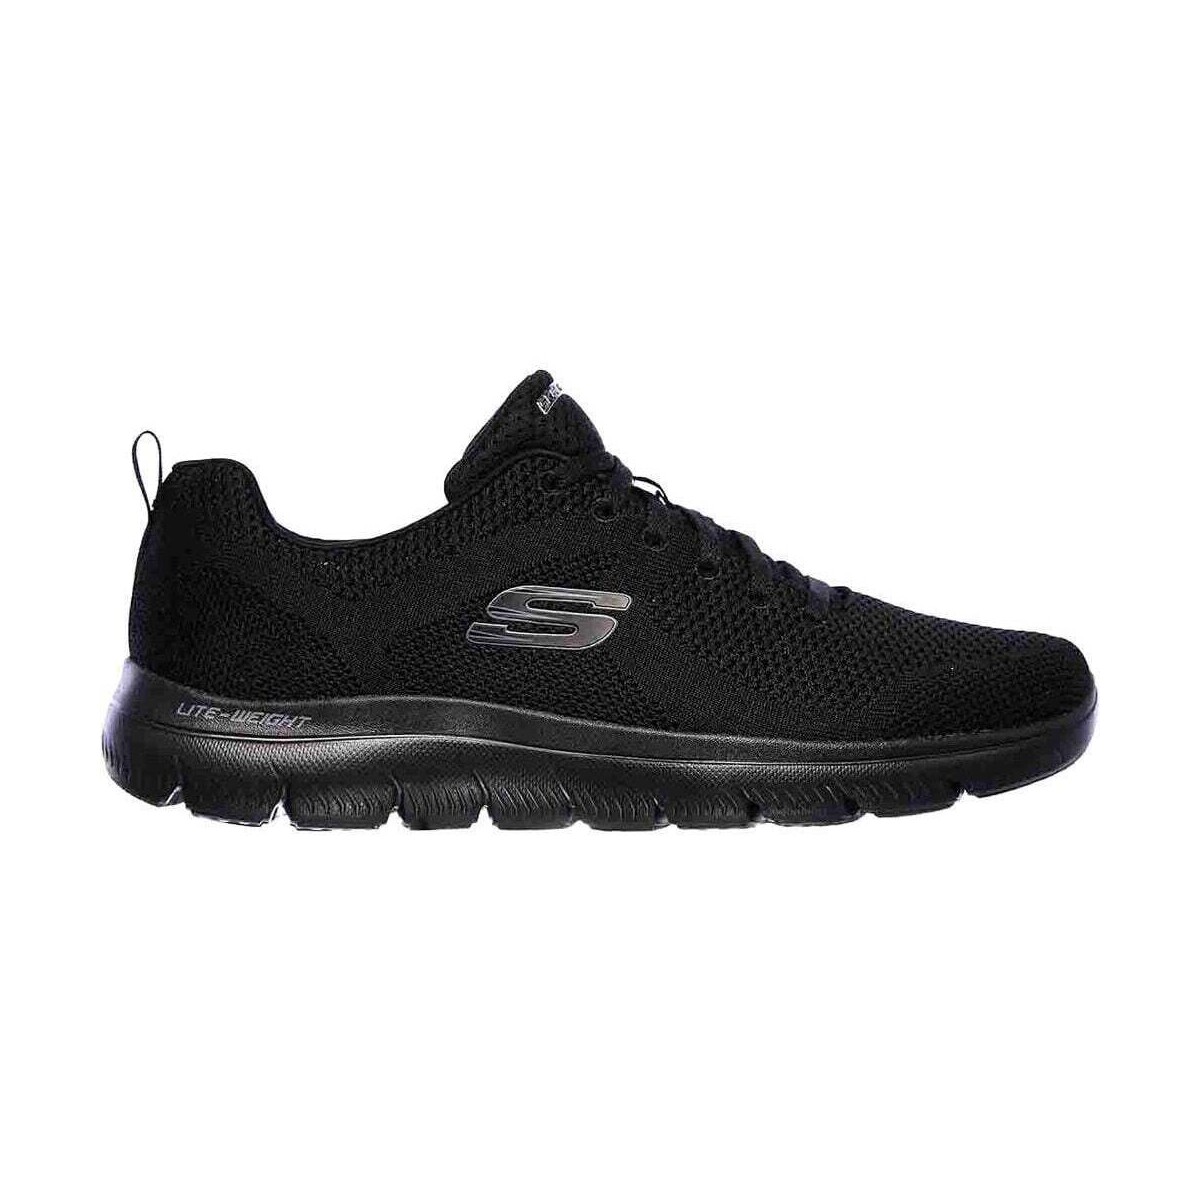 Zapatos Hombre Running / trail Skechers SUMMITS - BRISBANE Negro